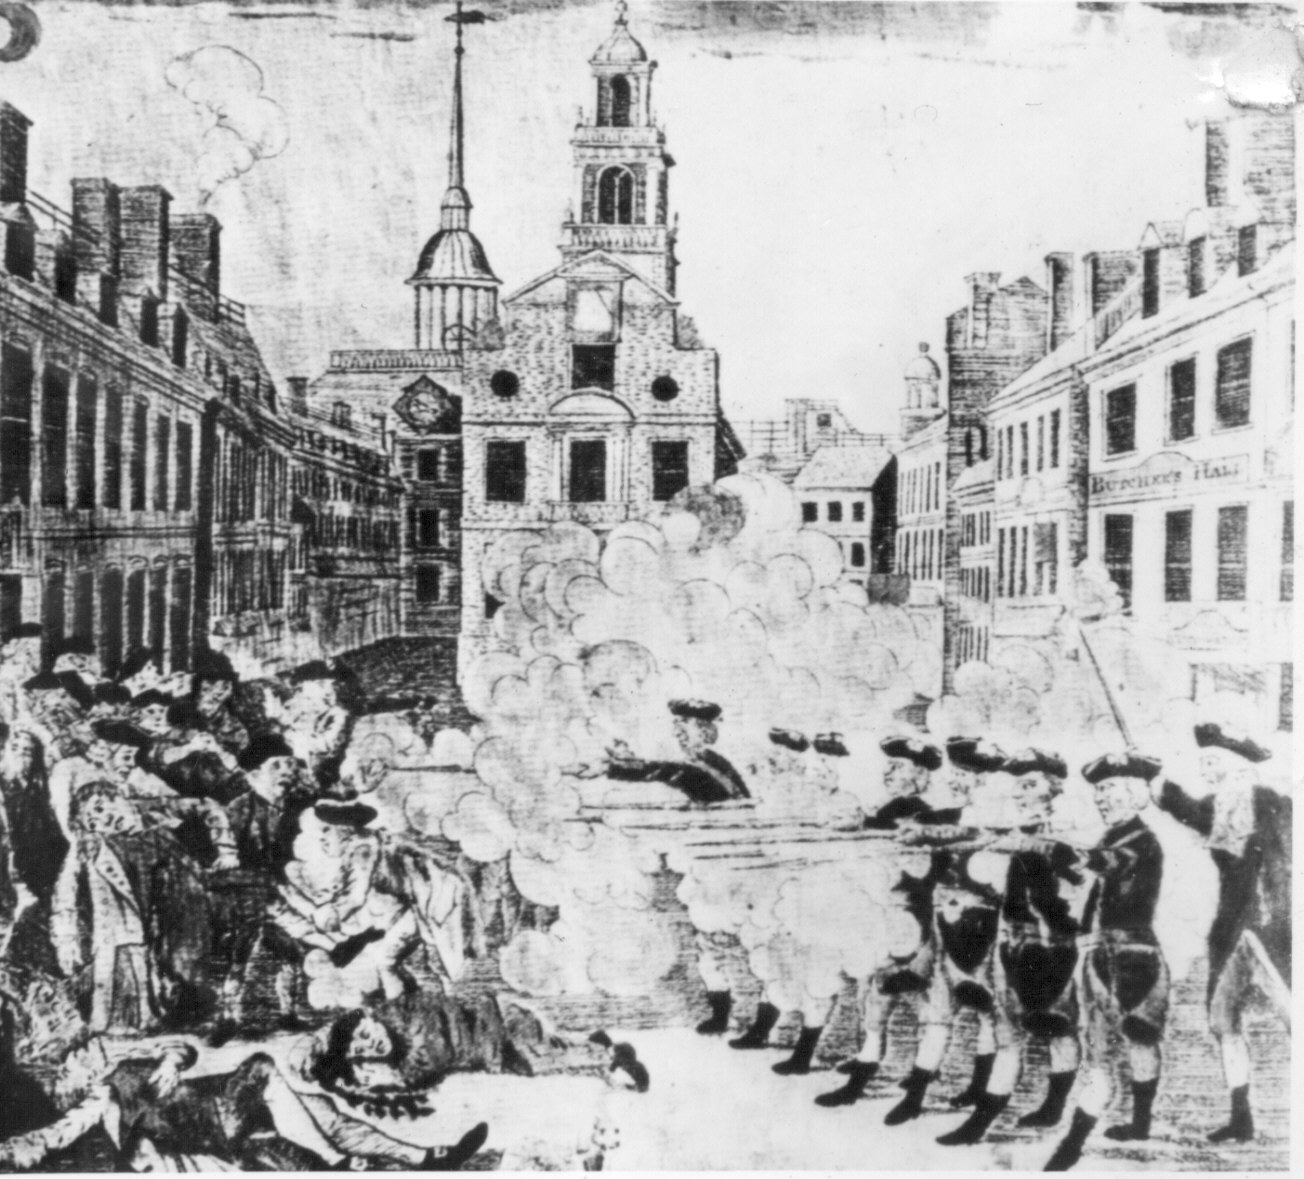 boston massacre research